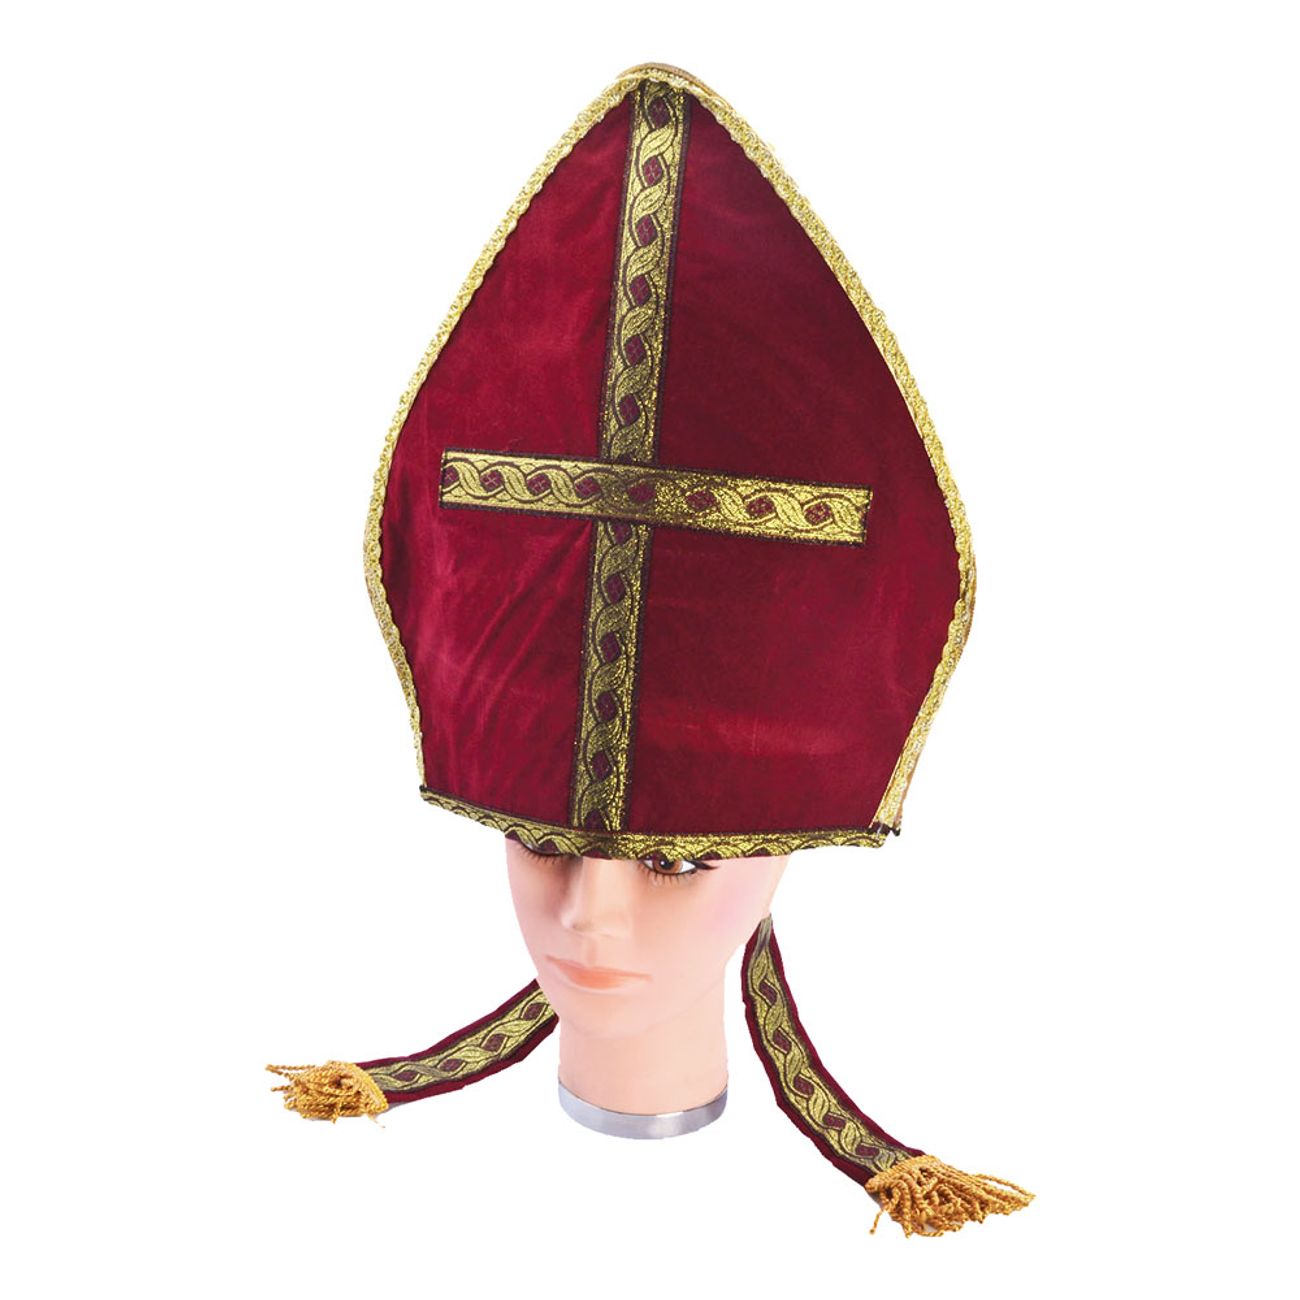 pontiff-hatt-1